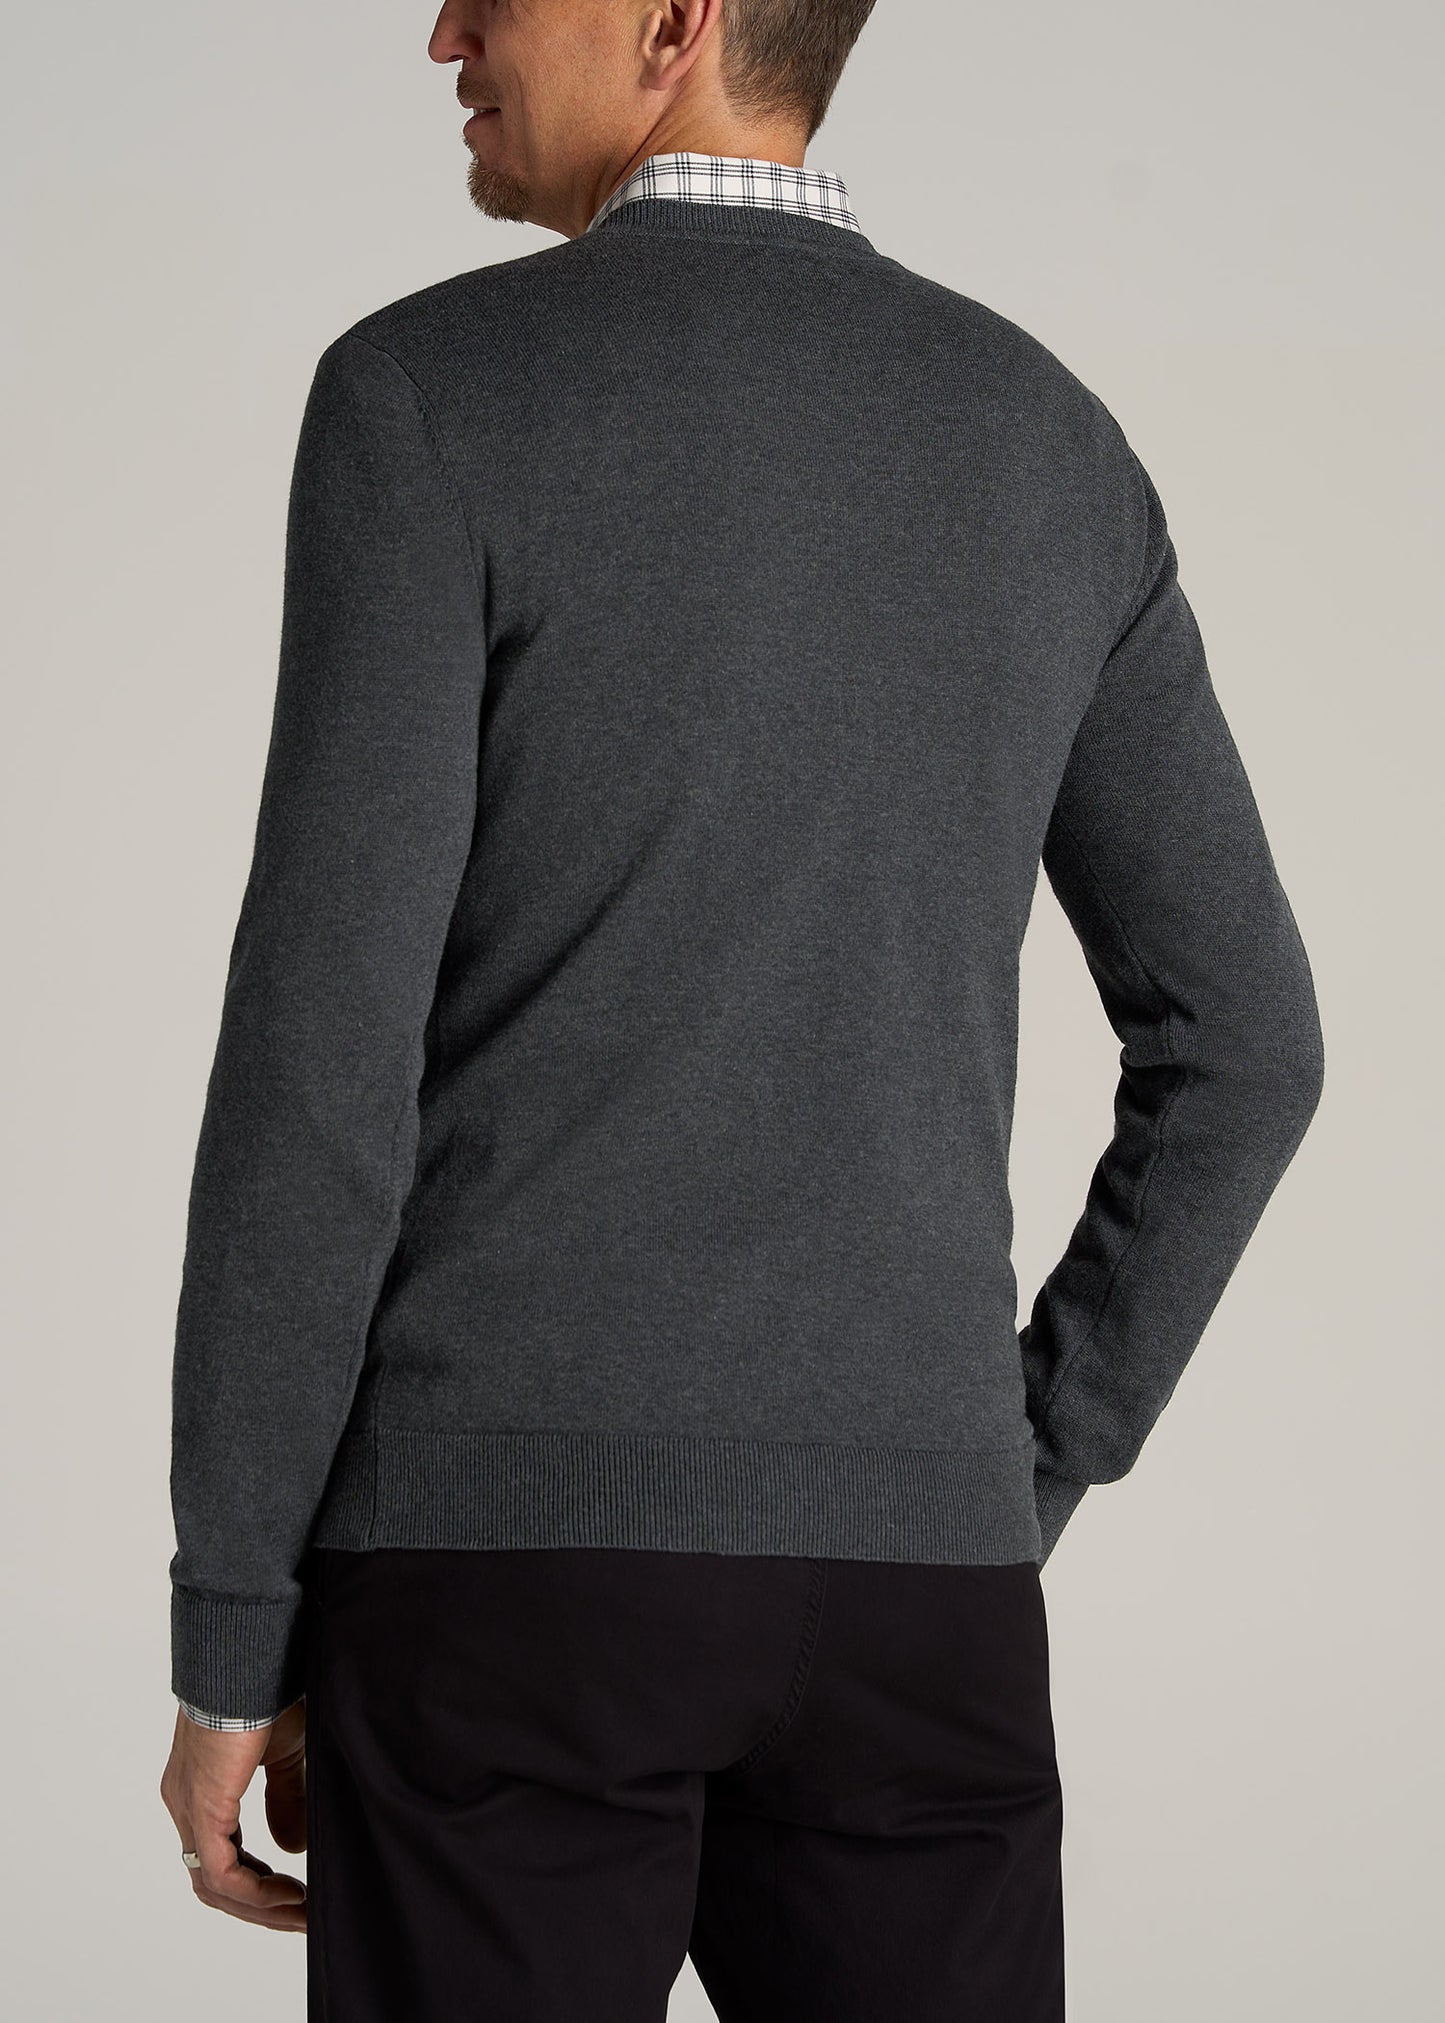 Burberry - Black V-Neck Cashmere Sweater w/ Plaid Elbow Patches Sz